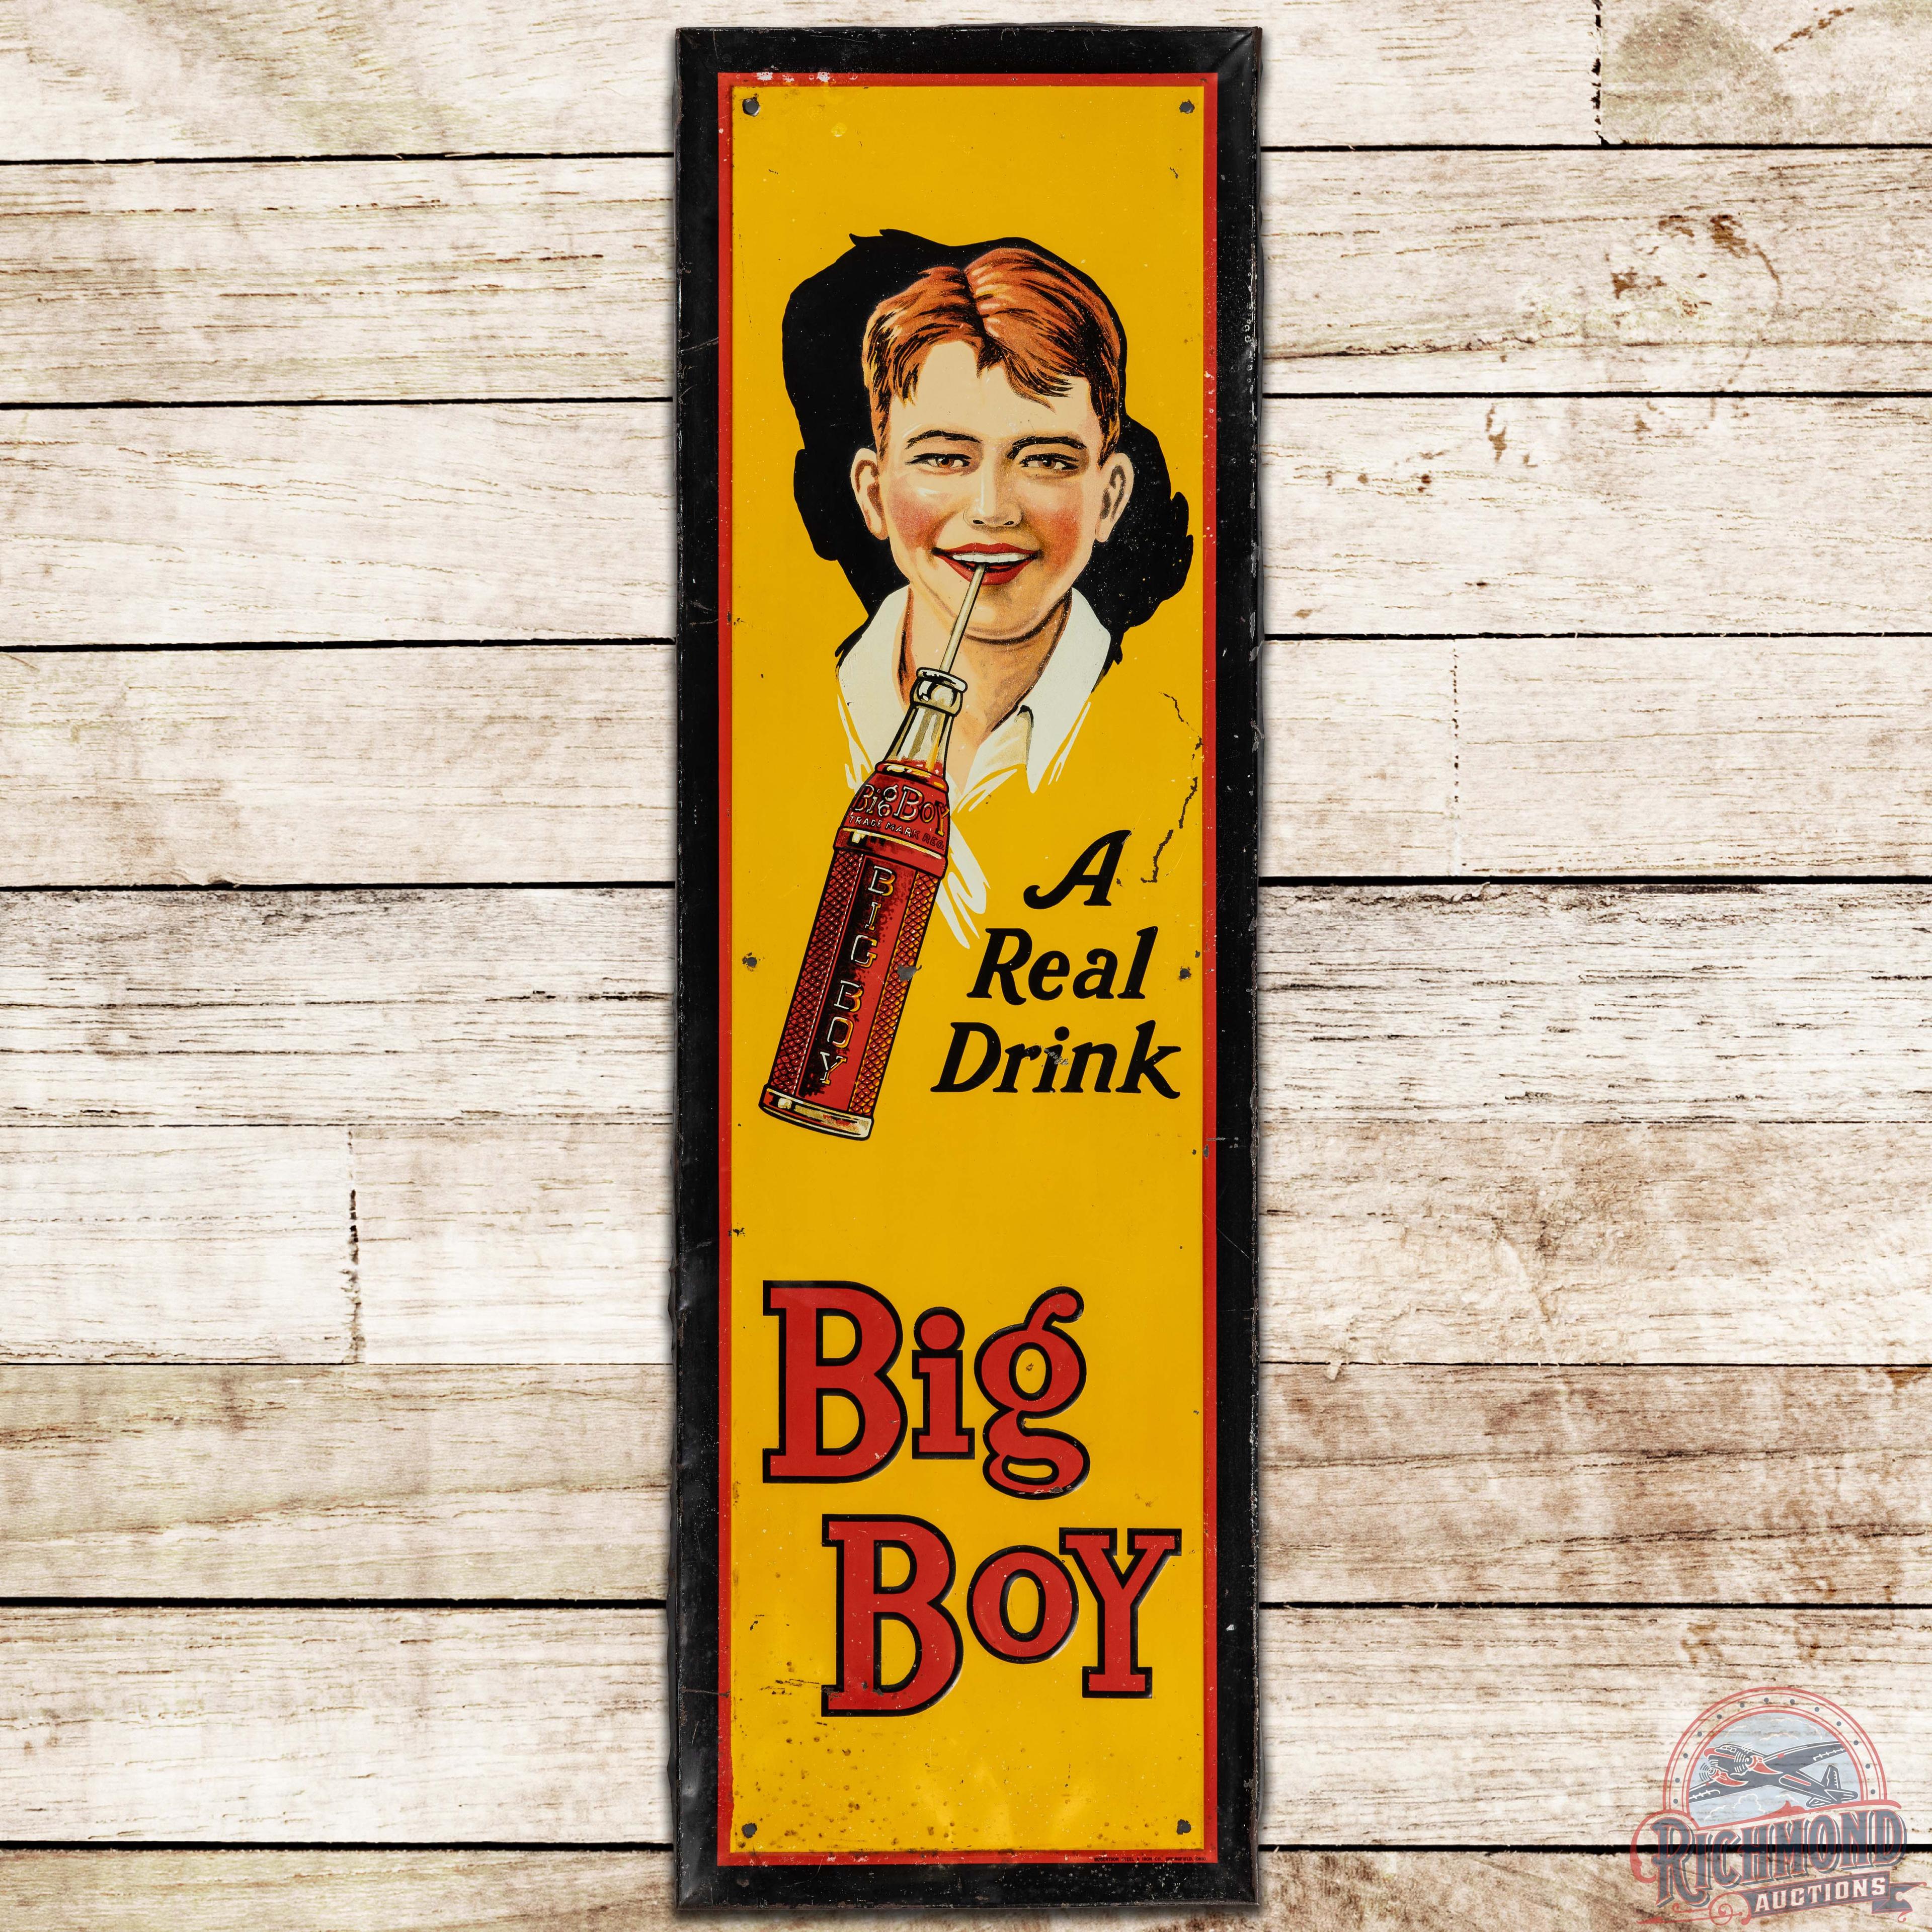 Big Boy "A Real Drink" Vertical SS Tin Sign w/ Boy & Bottle